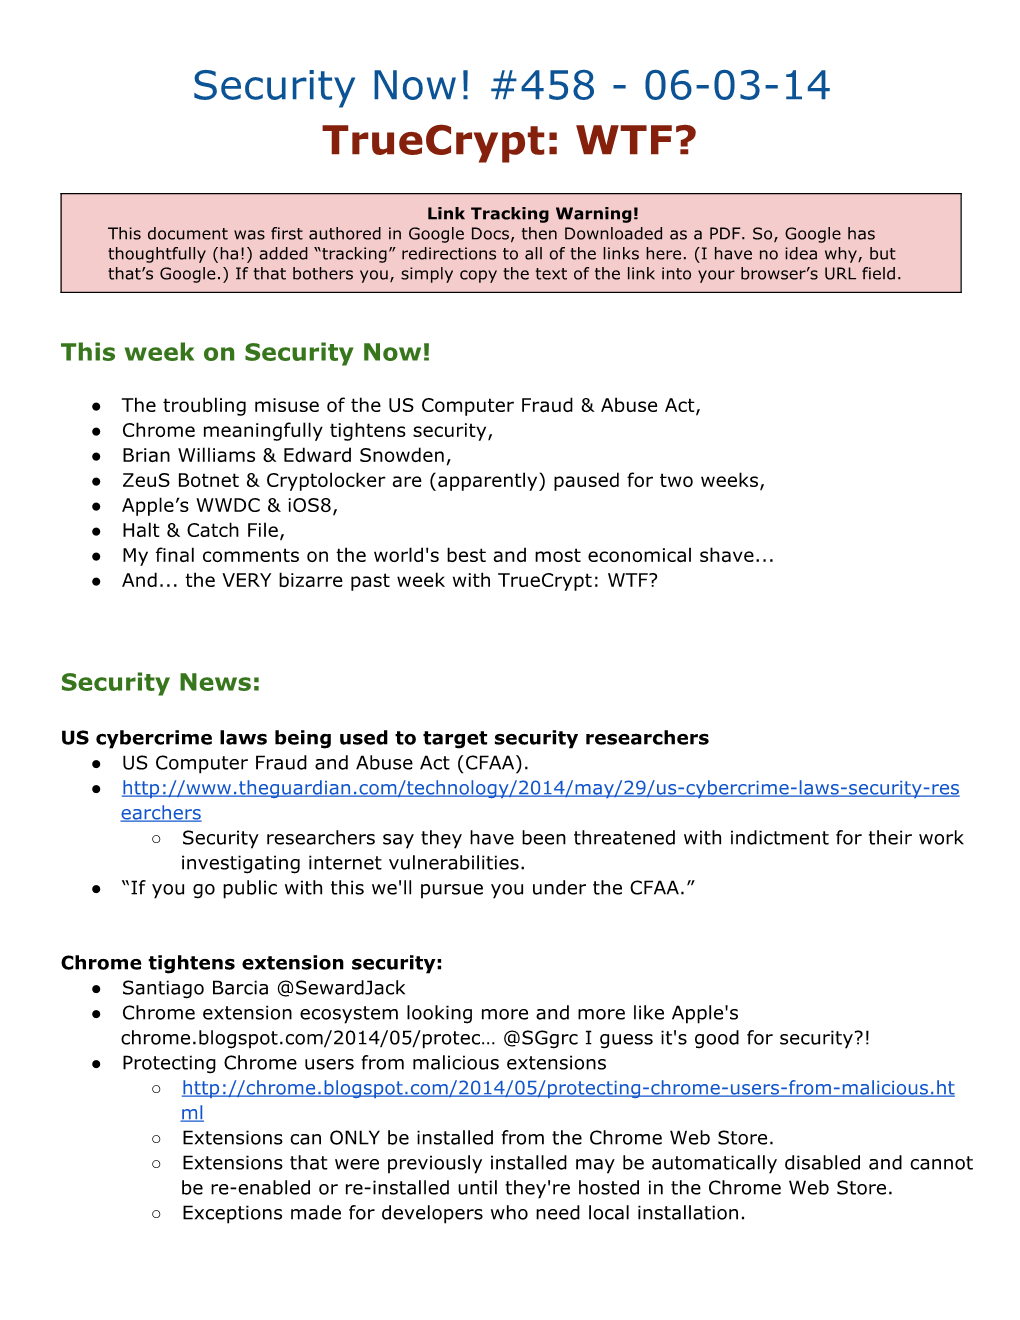 Security Now! #458 - 06-03-14 Truecrypt: WTF?